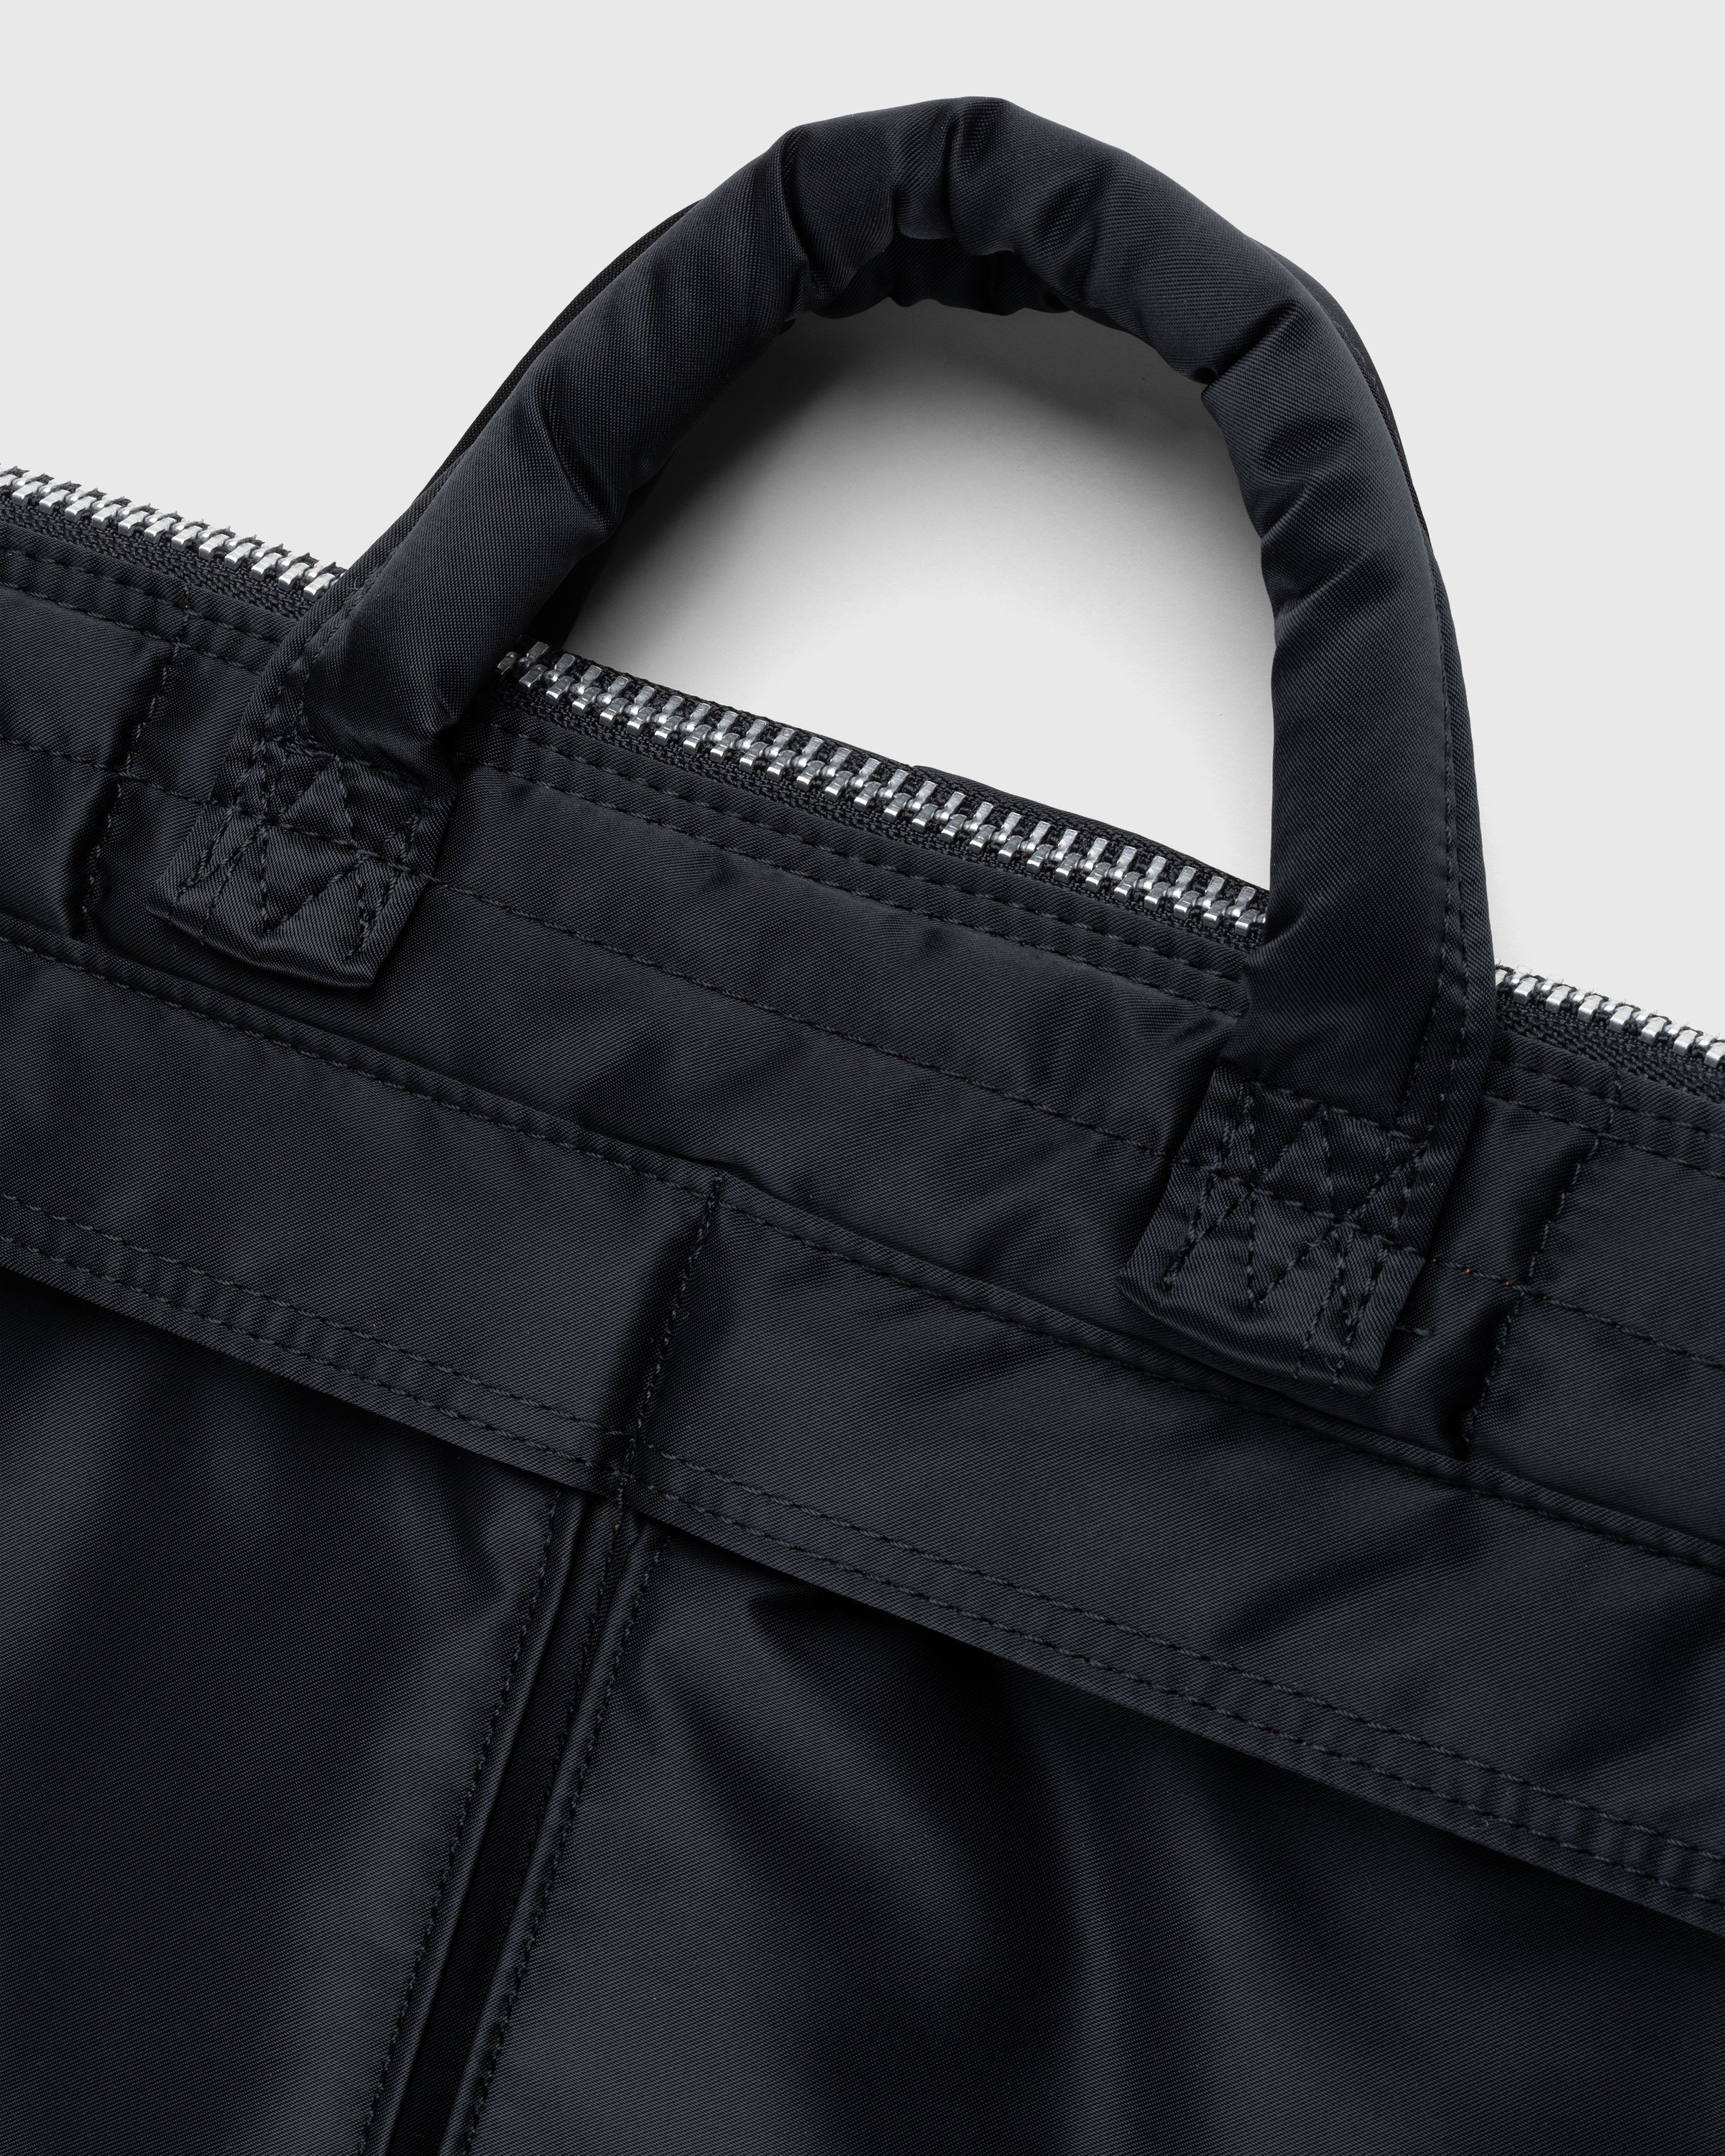 Porter-Yoshida & Co. - TANKER SHORT HELMET BAG (S) - Accessories - Black - Image 6